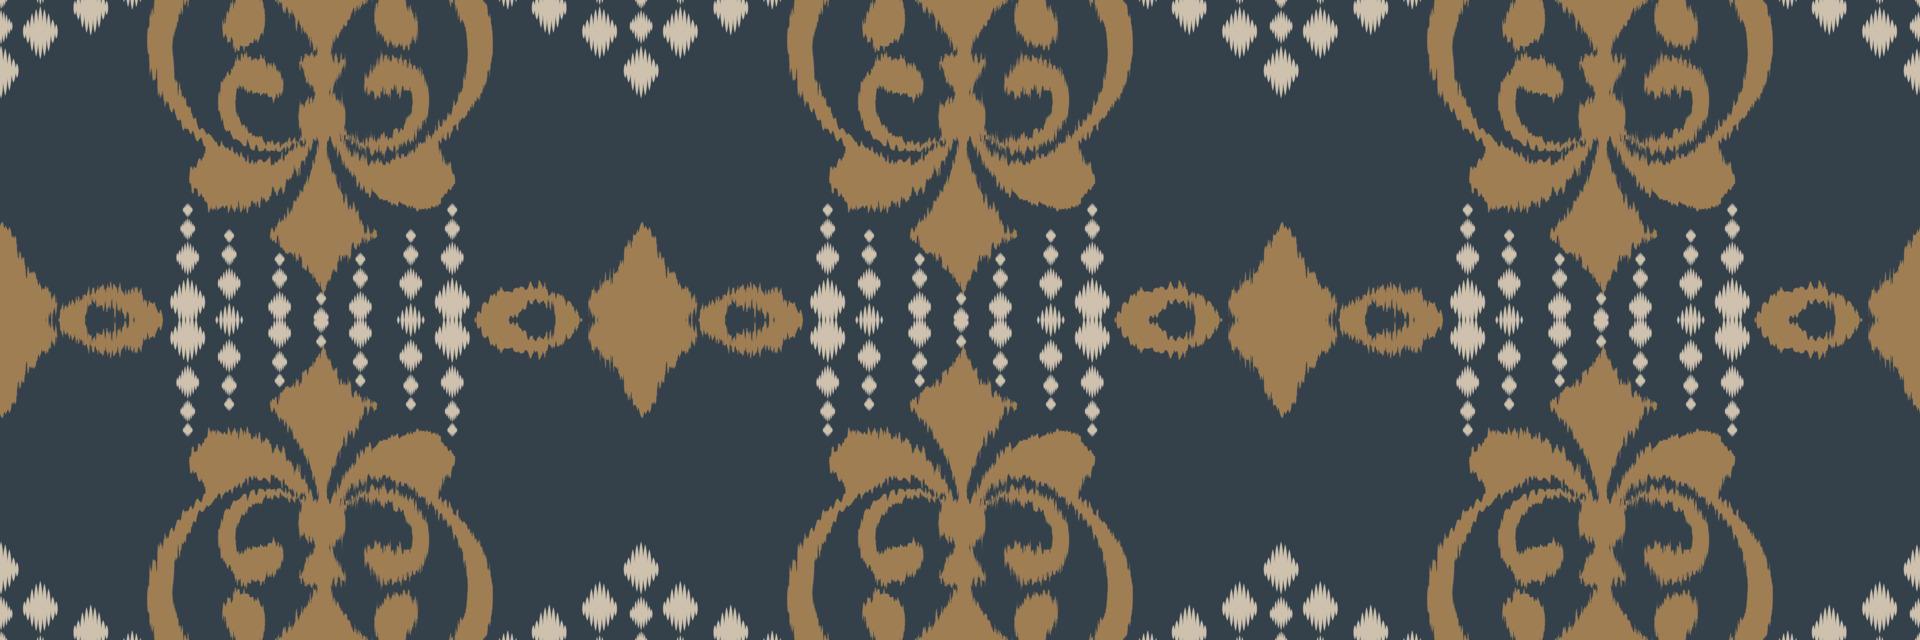 ikat marco batik textil patrón sin costuras diseño de vector digital para imprimir saree kurti borneo borde de tela símbolos de pincel muestras elegantes